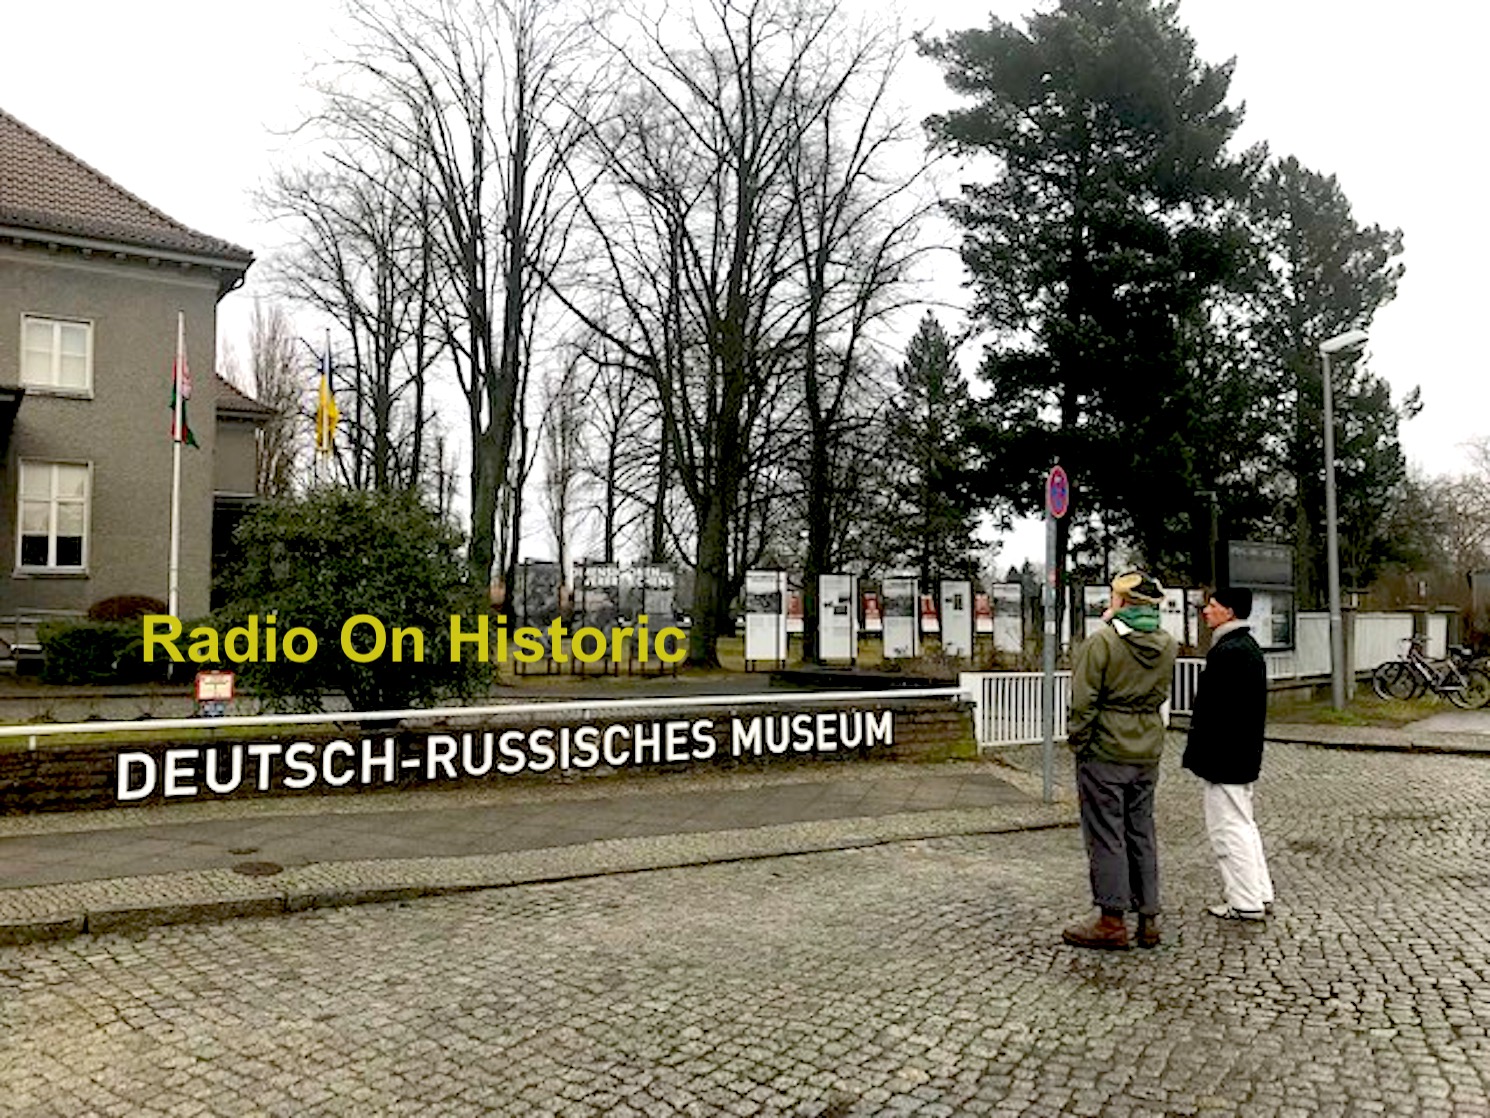 Radio On Historic – a visit to the Deutsch-Russisches Museum in Berlin